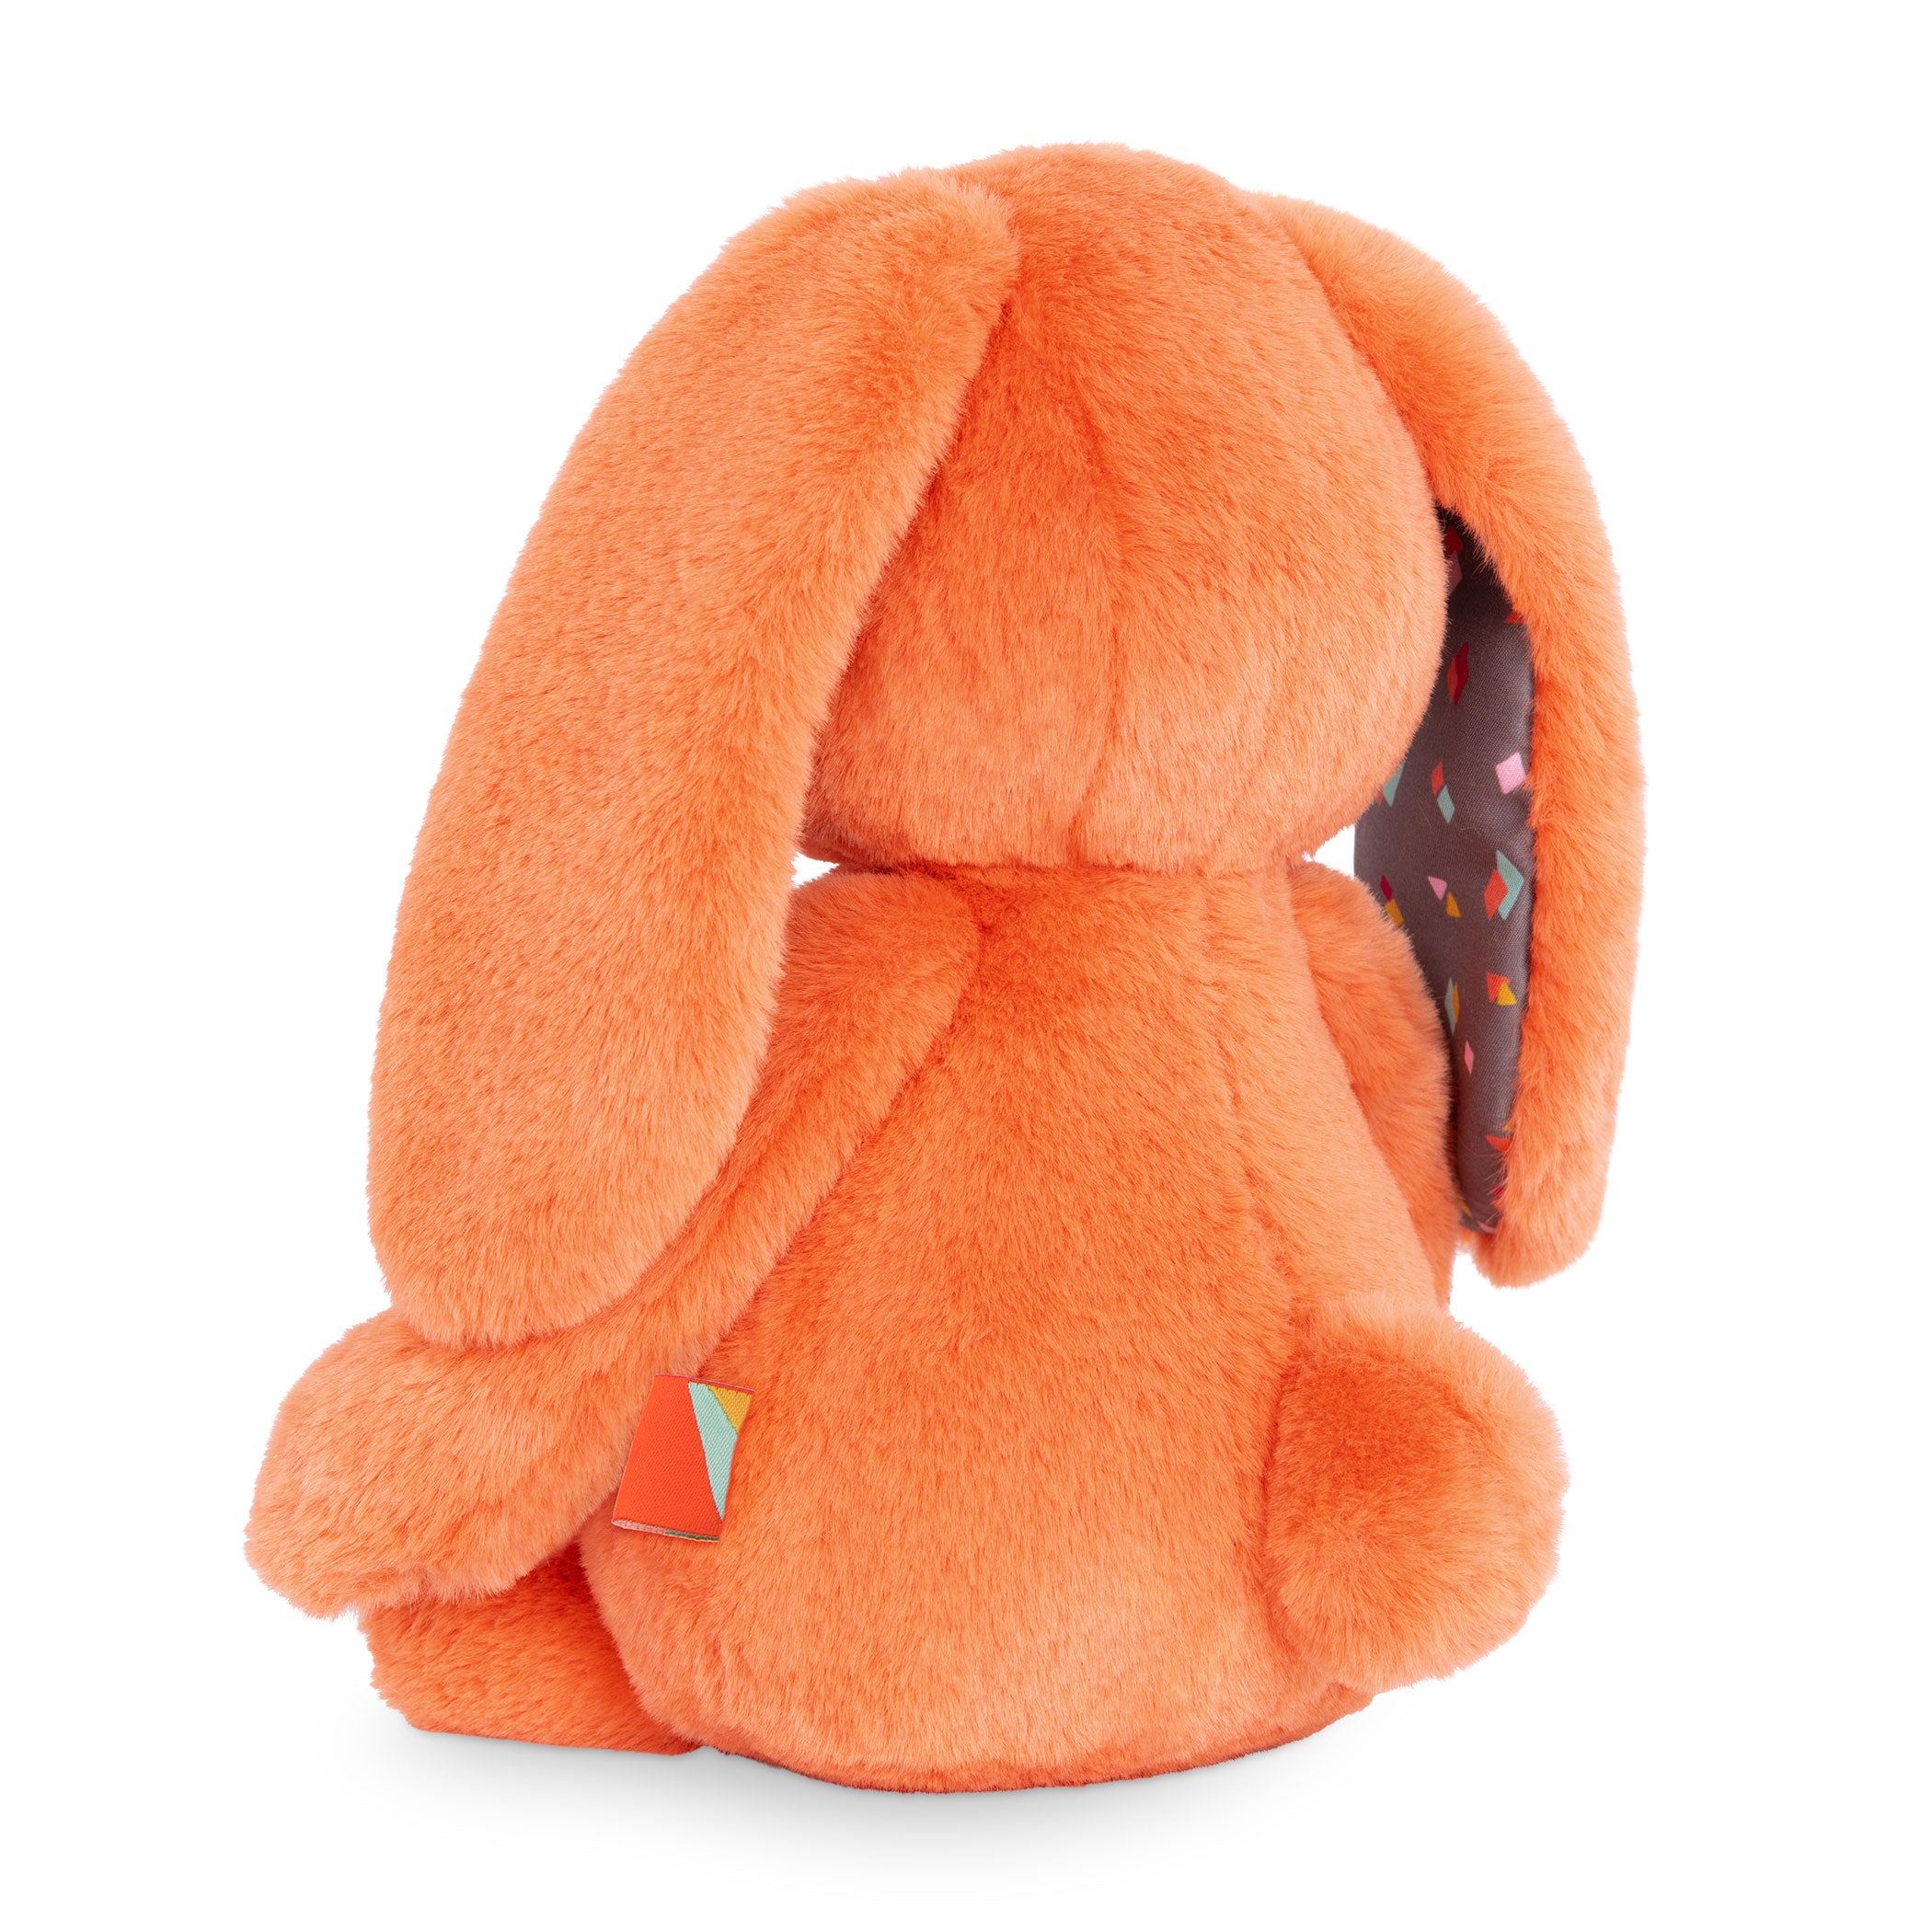 Orange plush bunny.